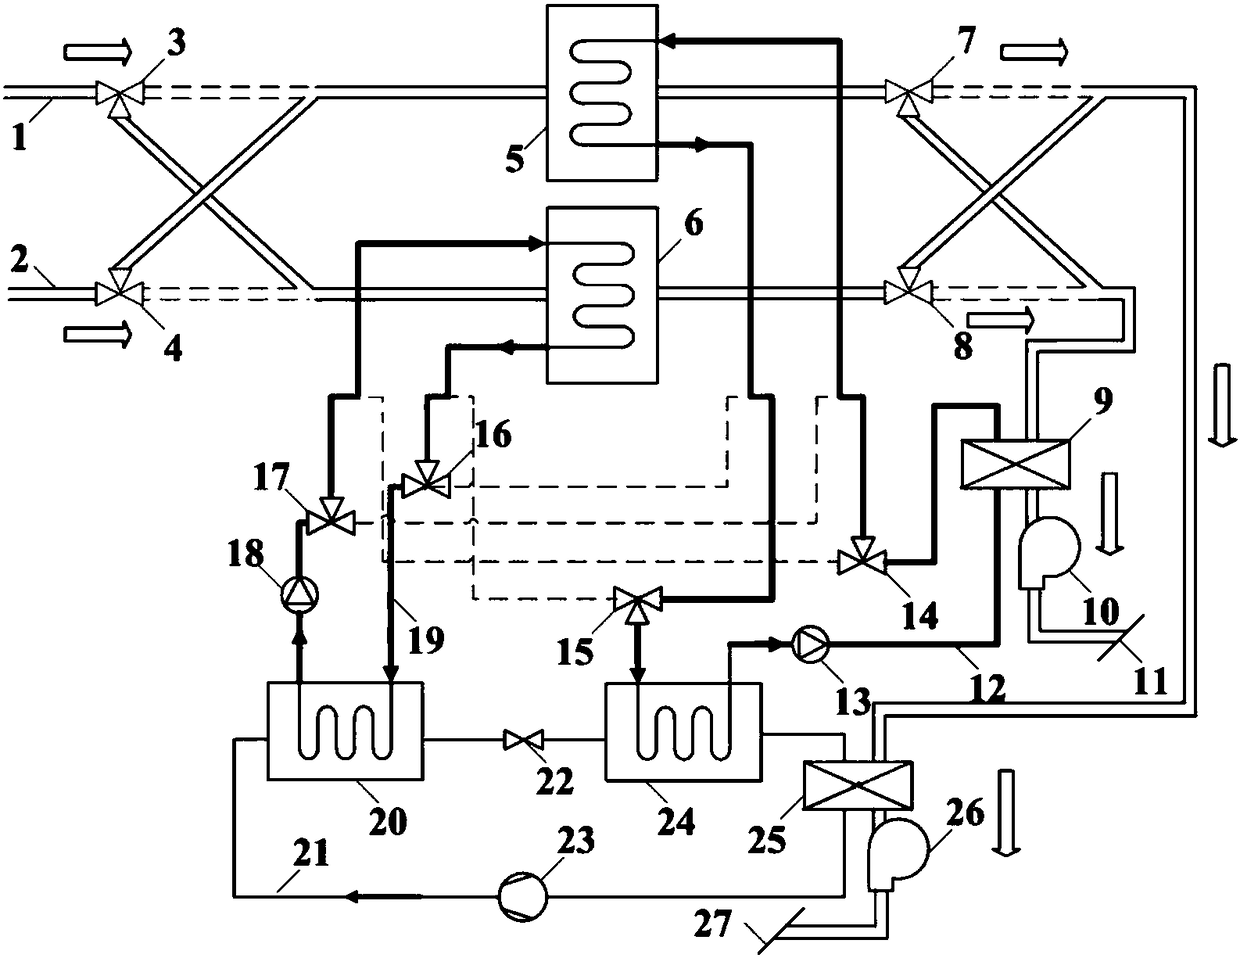 Regenerative heat recovery dehumidification heat pump system and its operation method